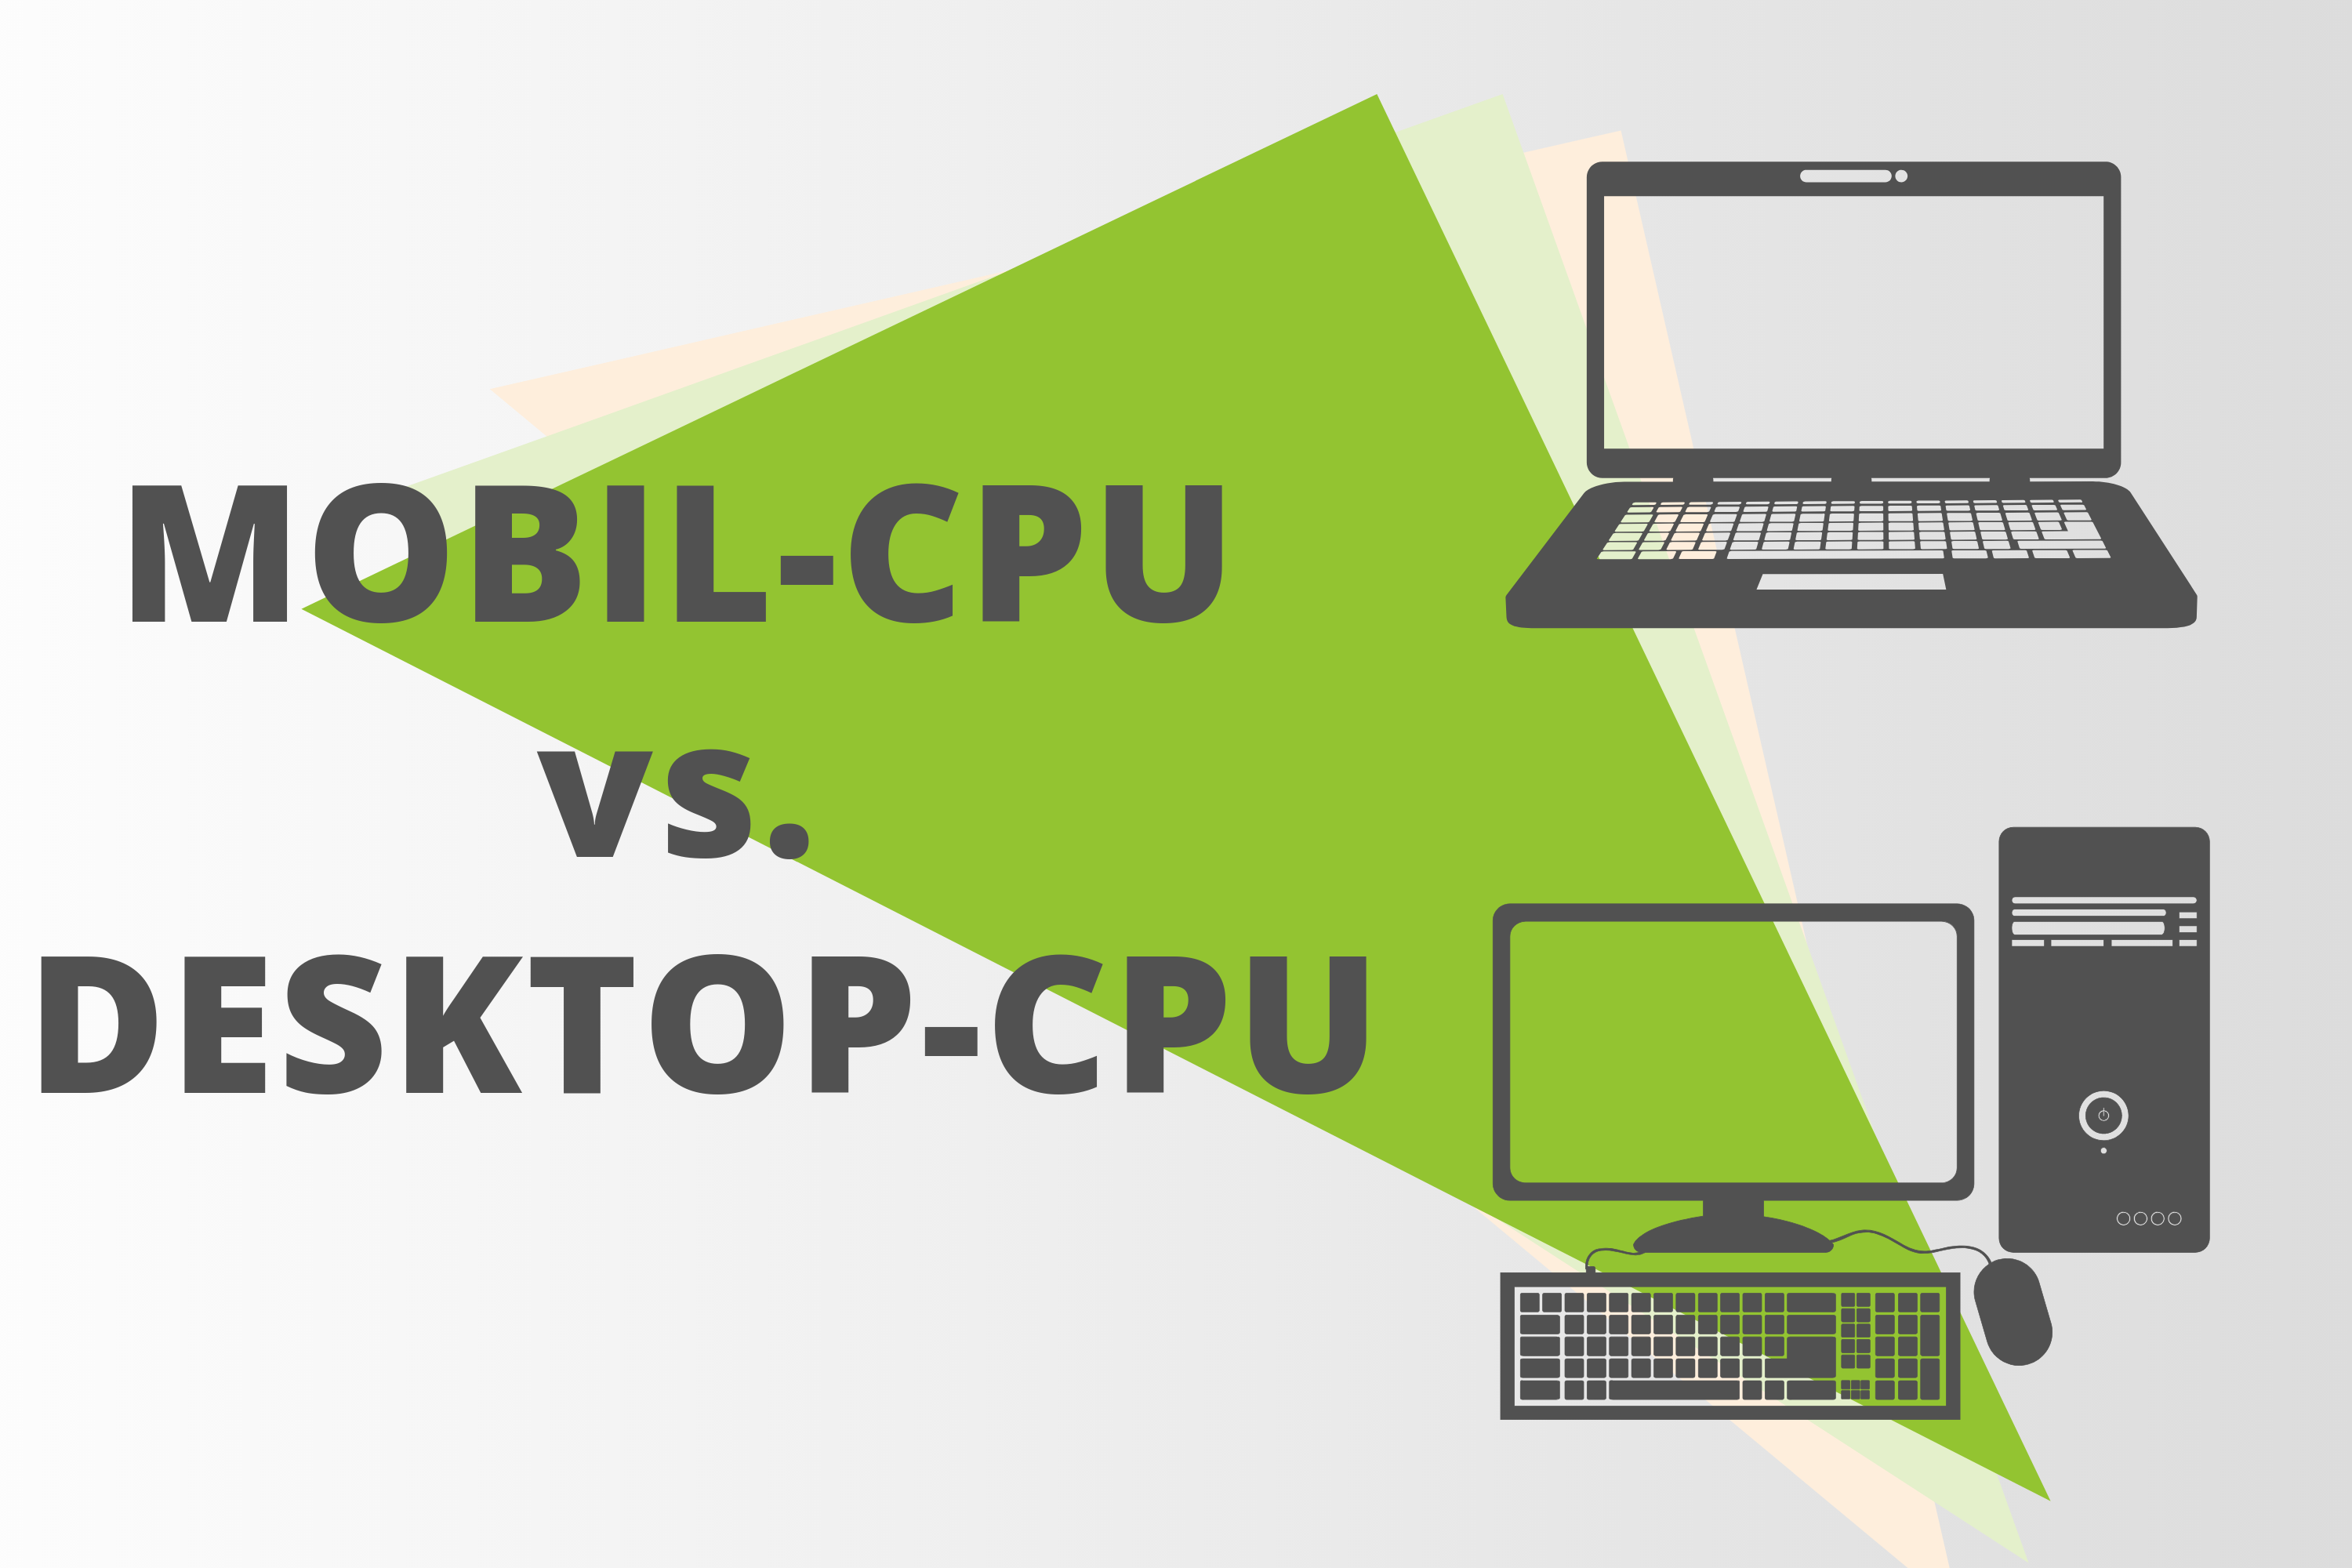 Desktop and mobile CPUs